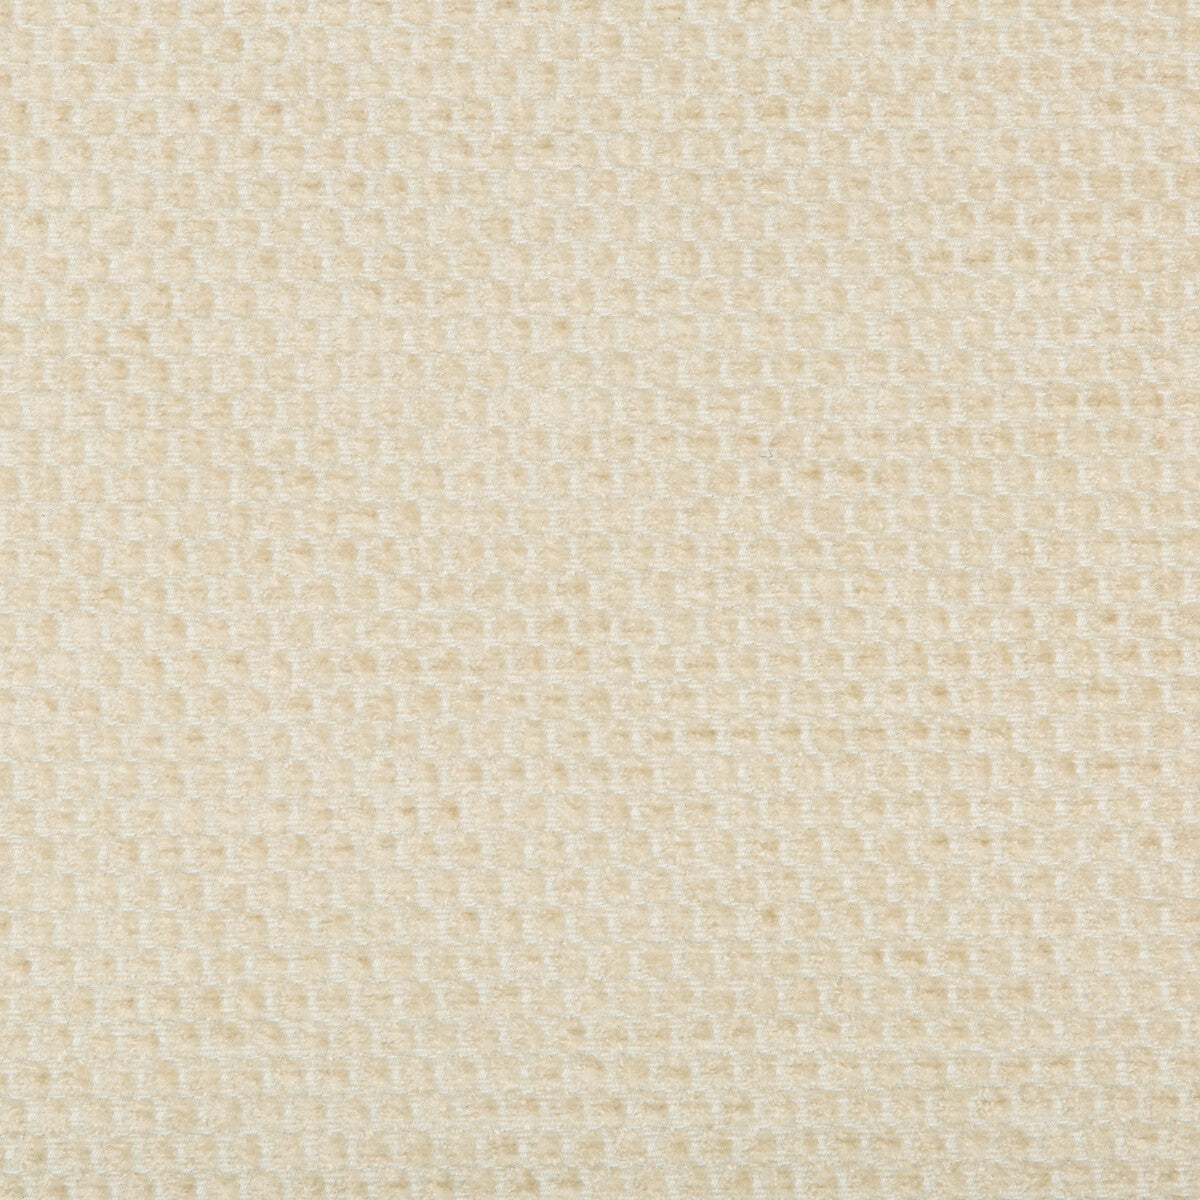 Kravet Smart fabric in 35321-16 color - pattern 35321.16.0 - by Kravet Smart in the Performance Kravetarmor collection